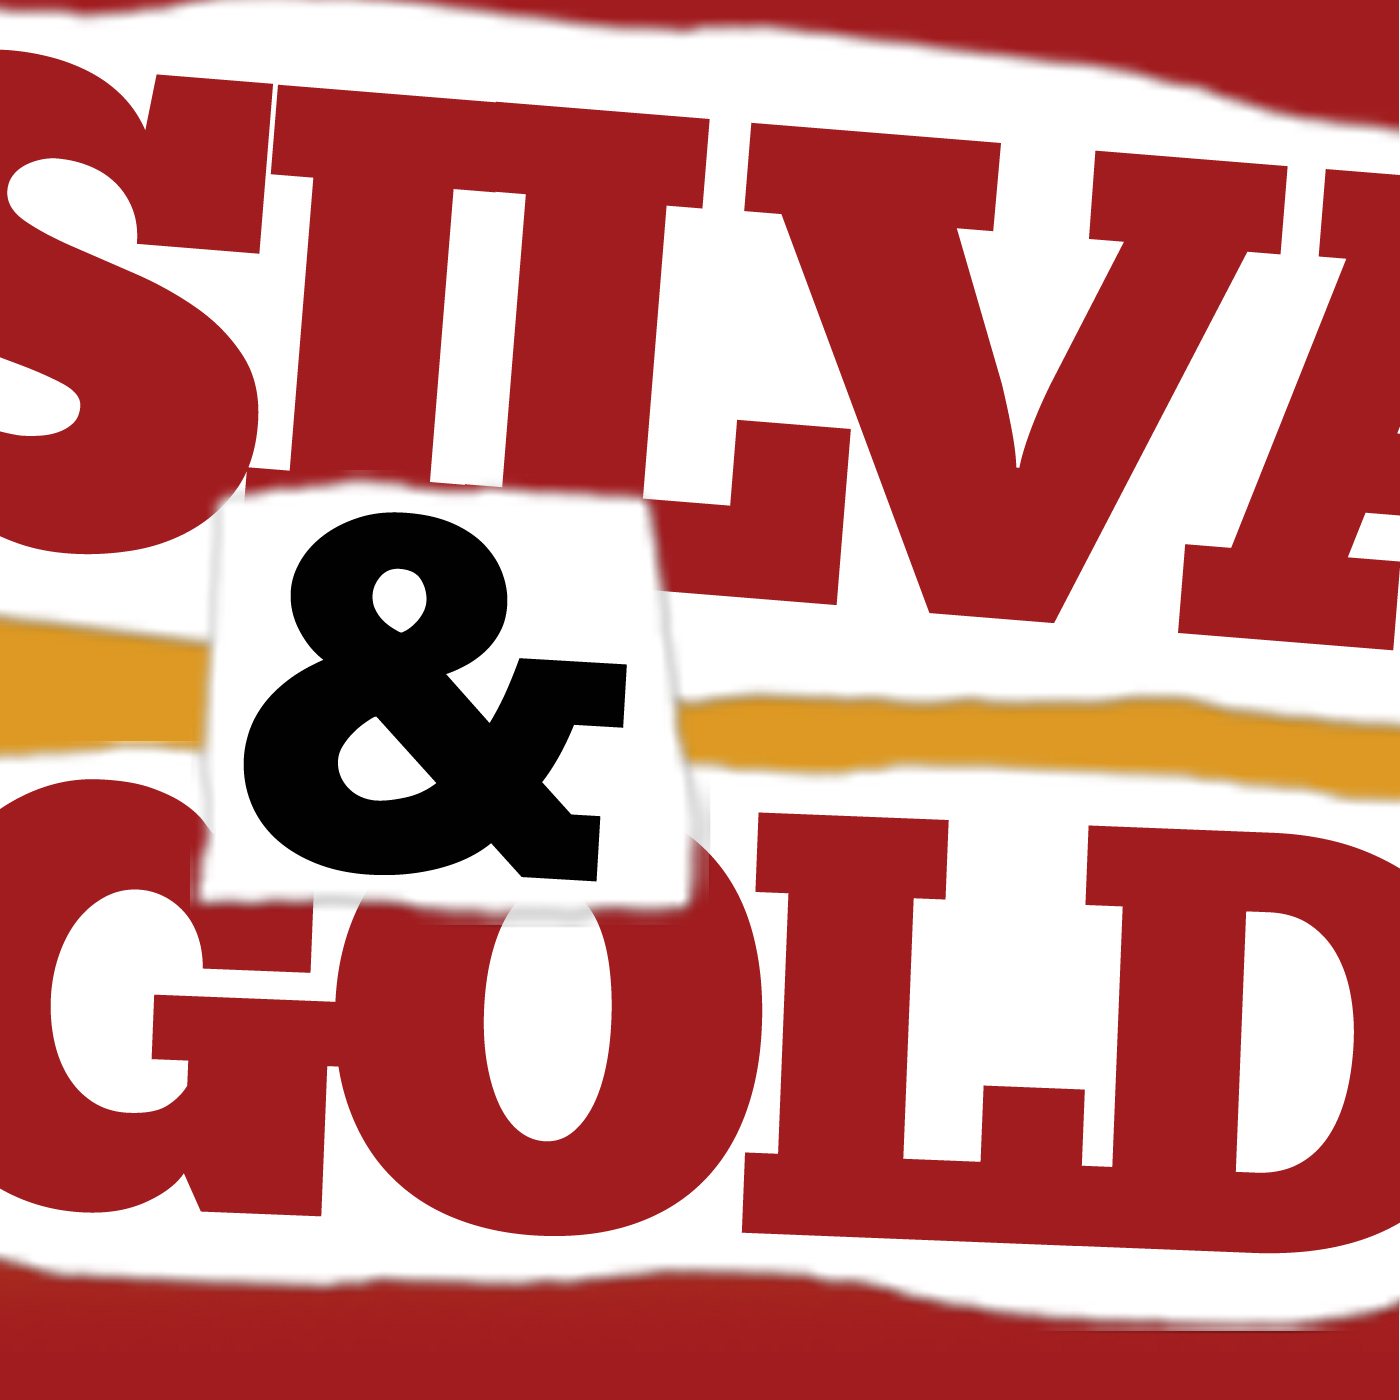 Silva and Gold